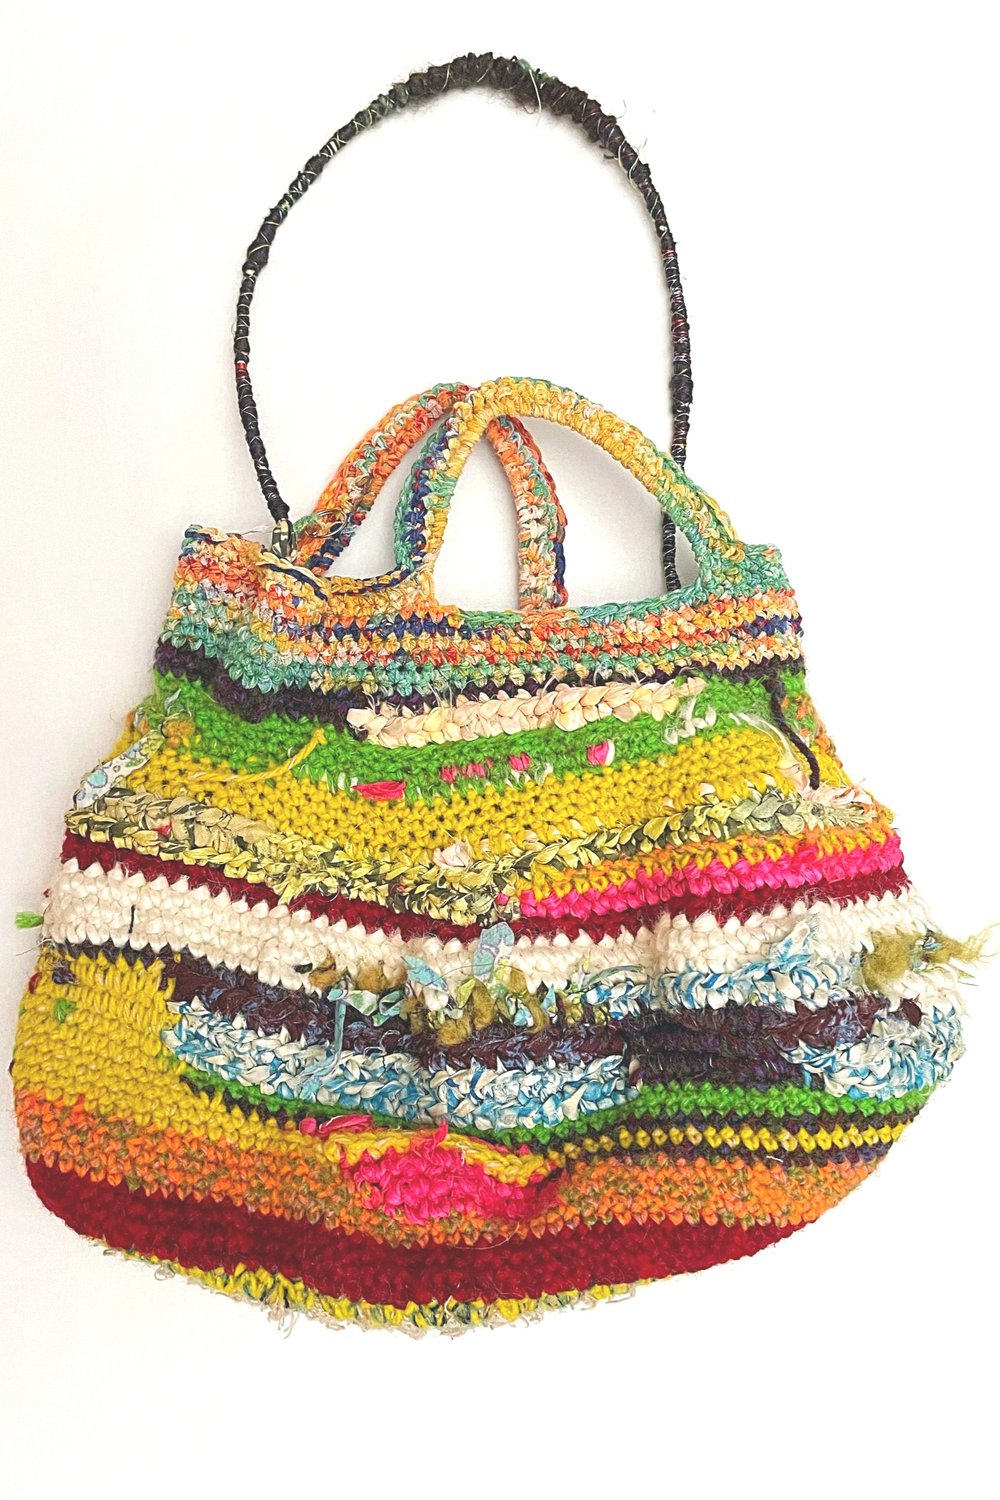 Crochet Purse #1 — Specks & KeepingsUnisex Clothing